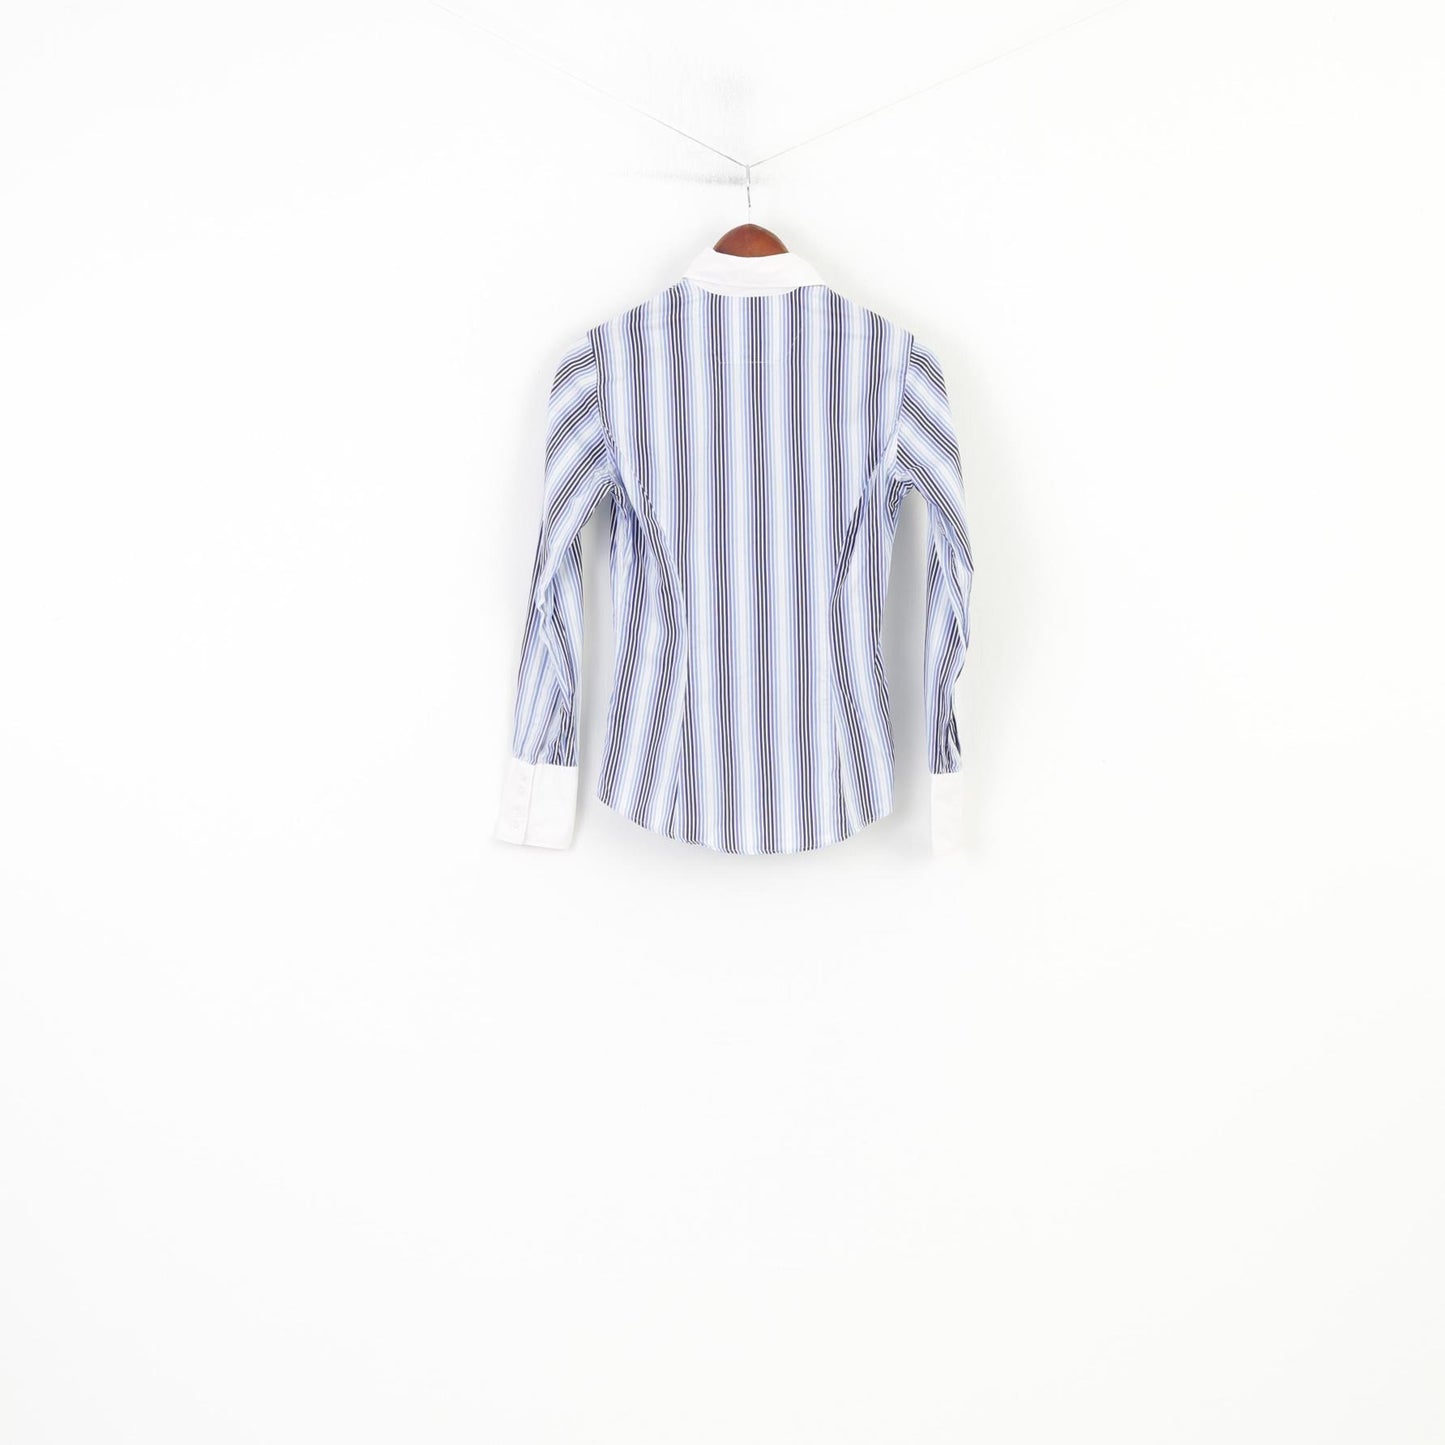 TM Lewin Women 8 S Casual Shirt Striped Buttons Down Collar Long Sleeve  Top